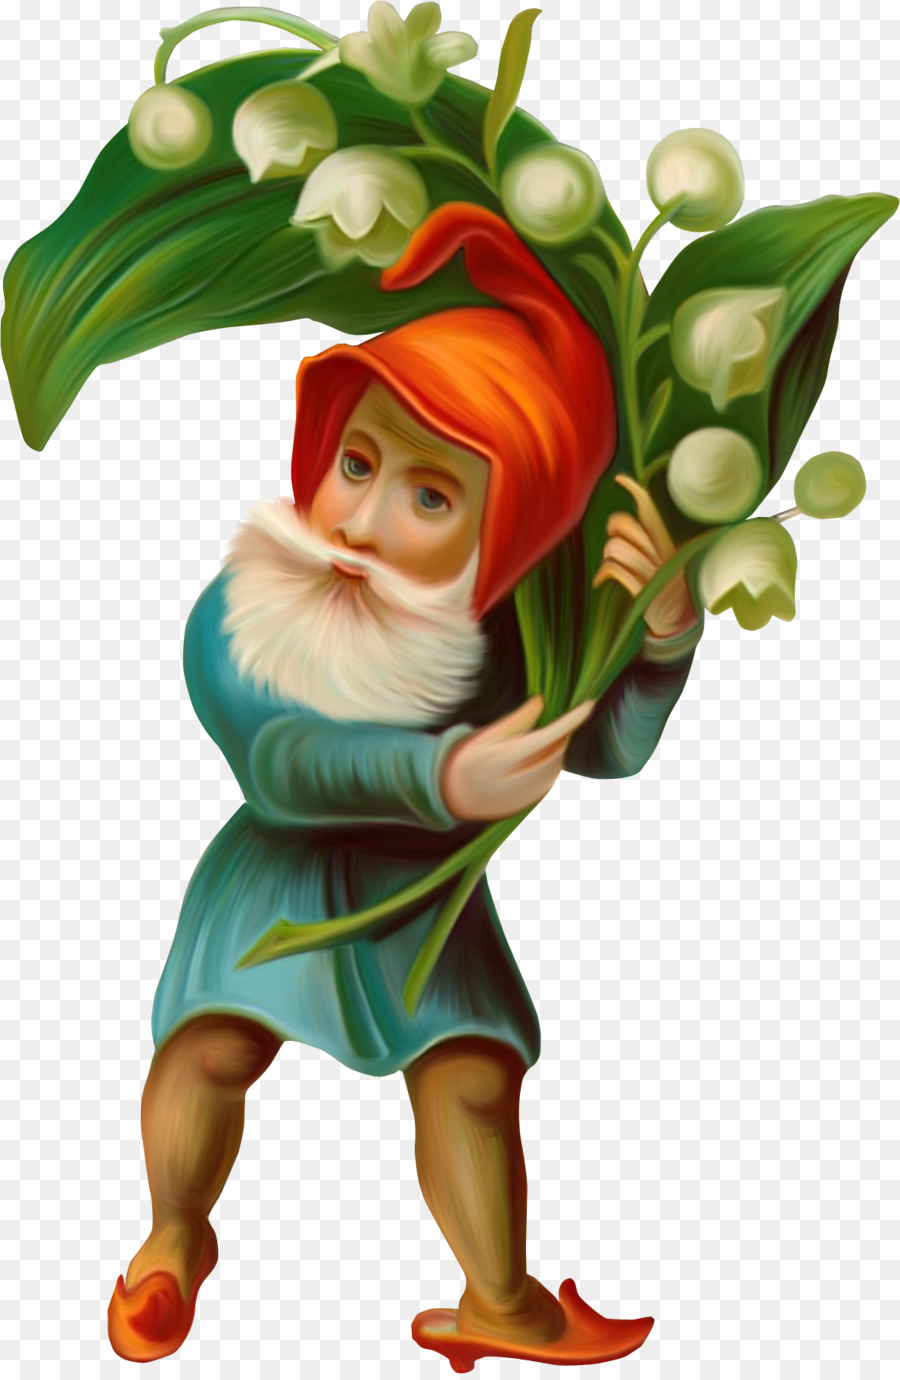 Garden gnome Leprechaun Clip art - kartikeya png download - 1189*1815 - Free Transparent Garden Gnome png Download.